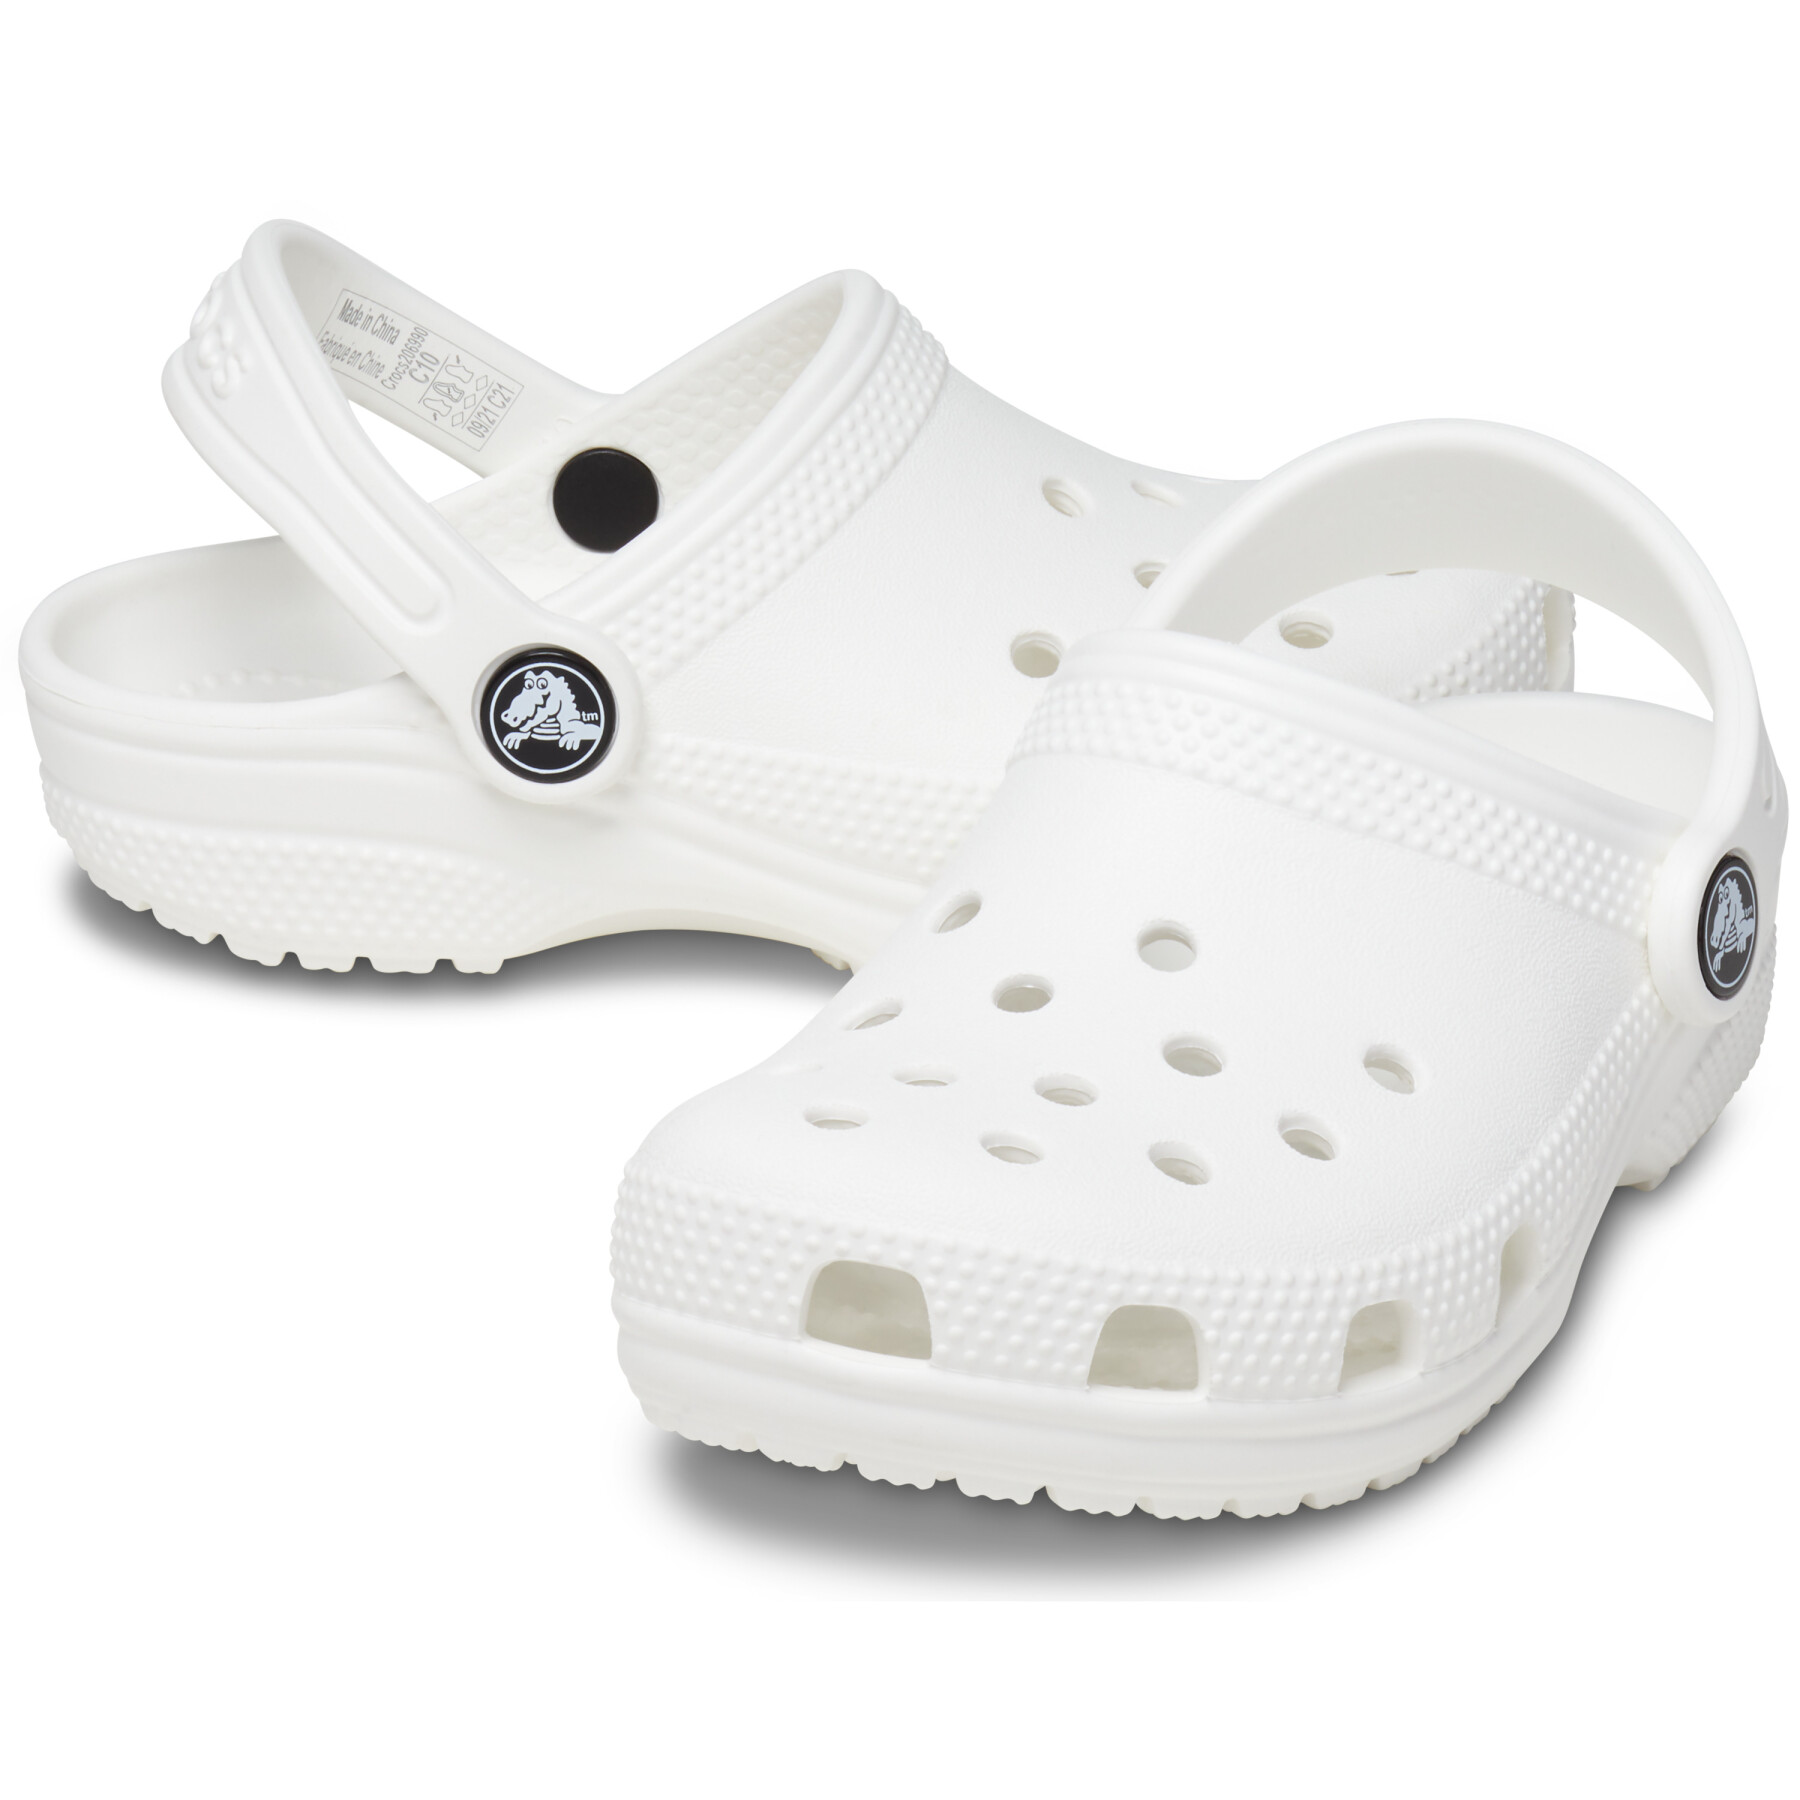 Classic baby clogs Crocs T